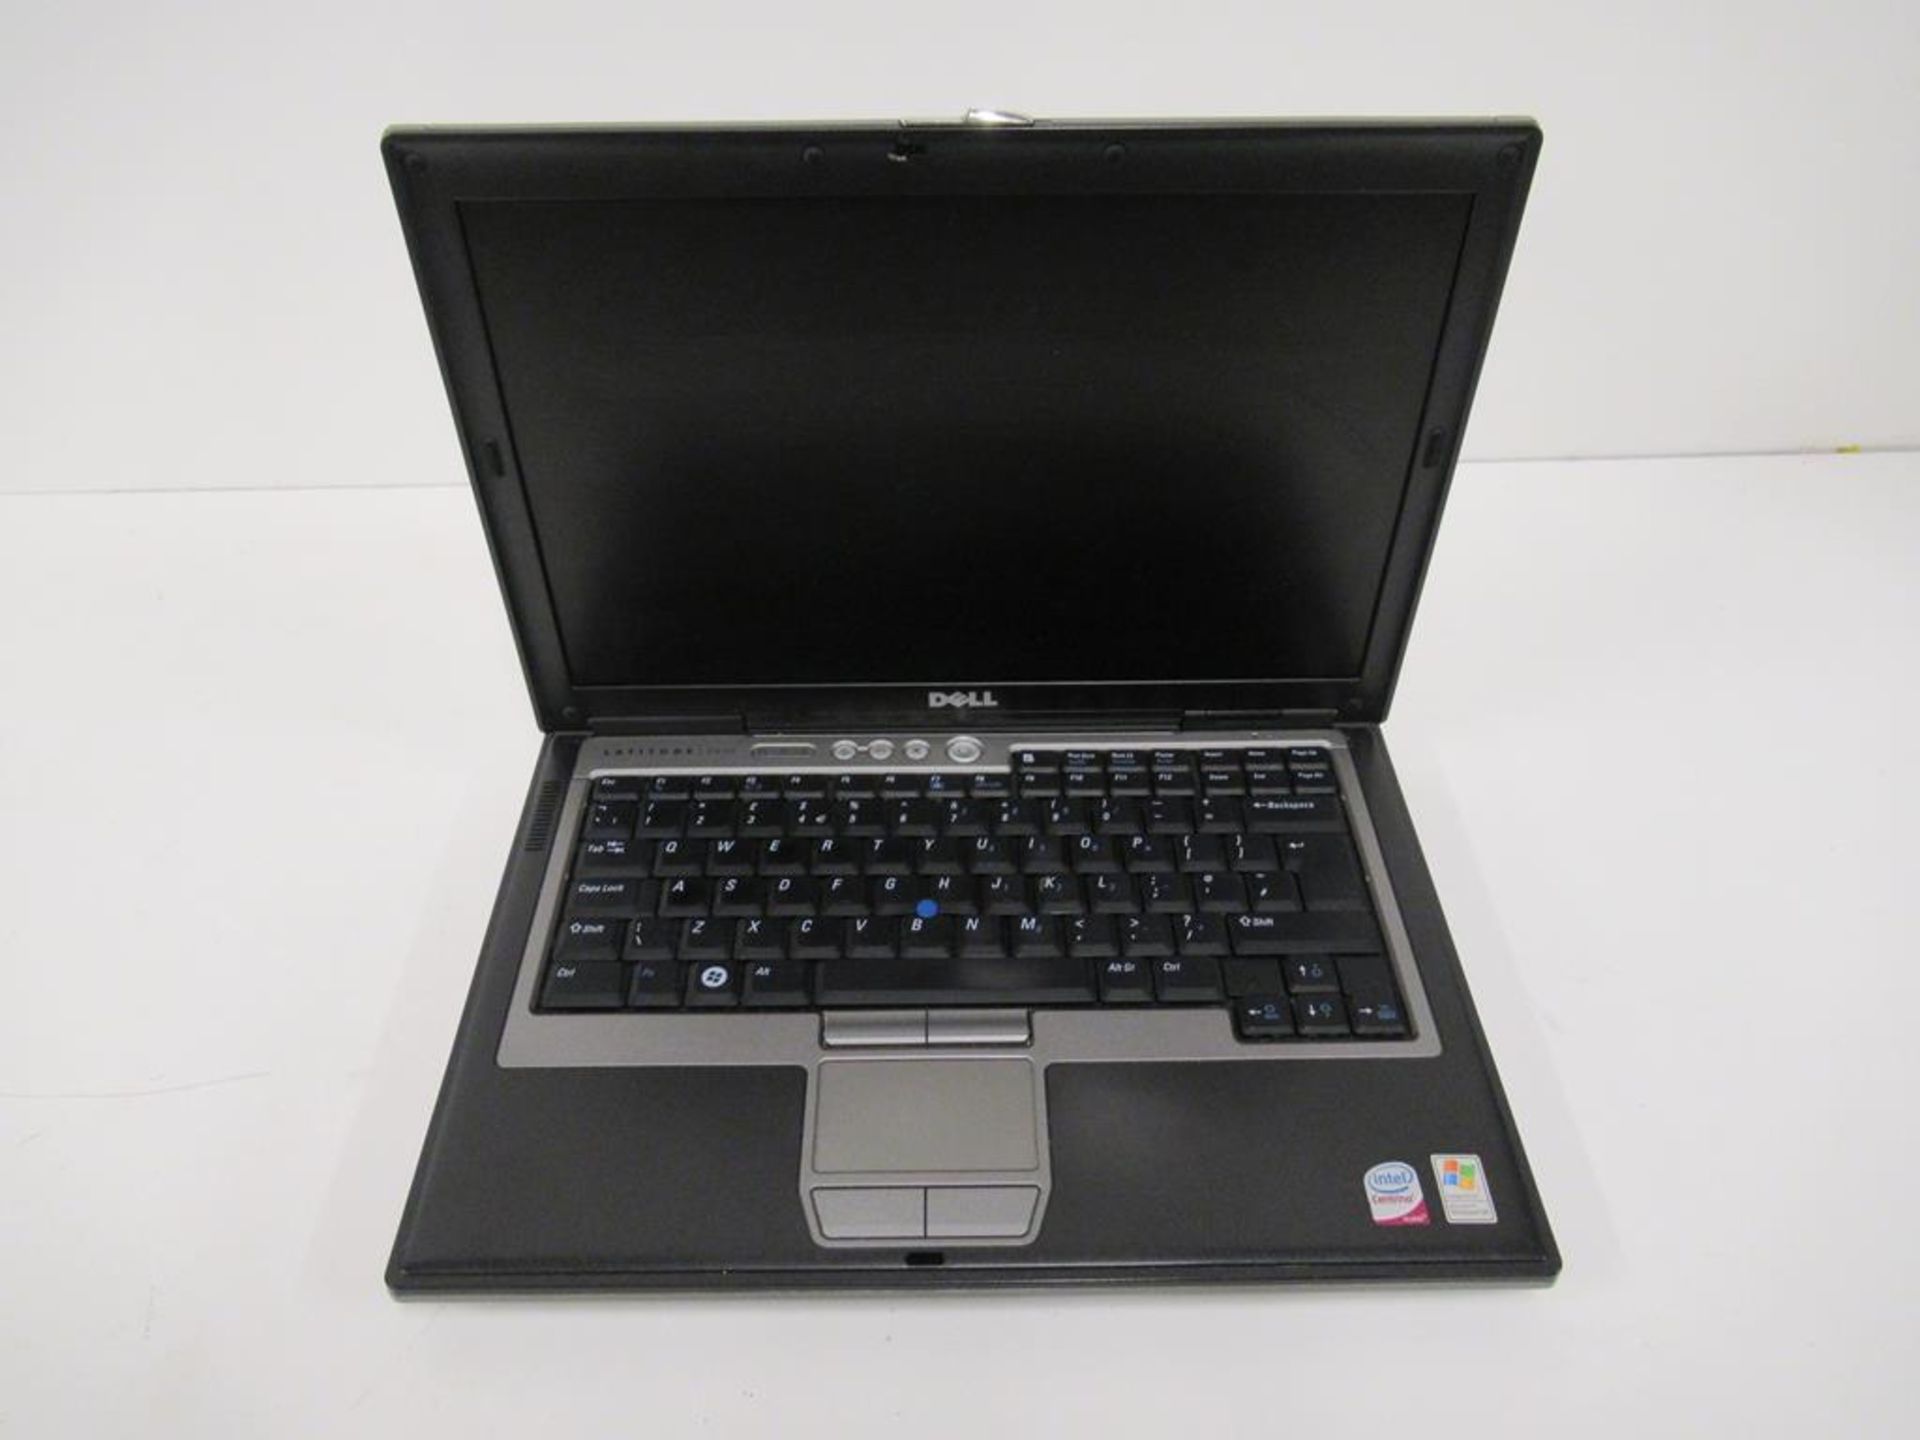 A DELL Latitude D630 Intel Centrino Laptop - Image 2 of 3